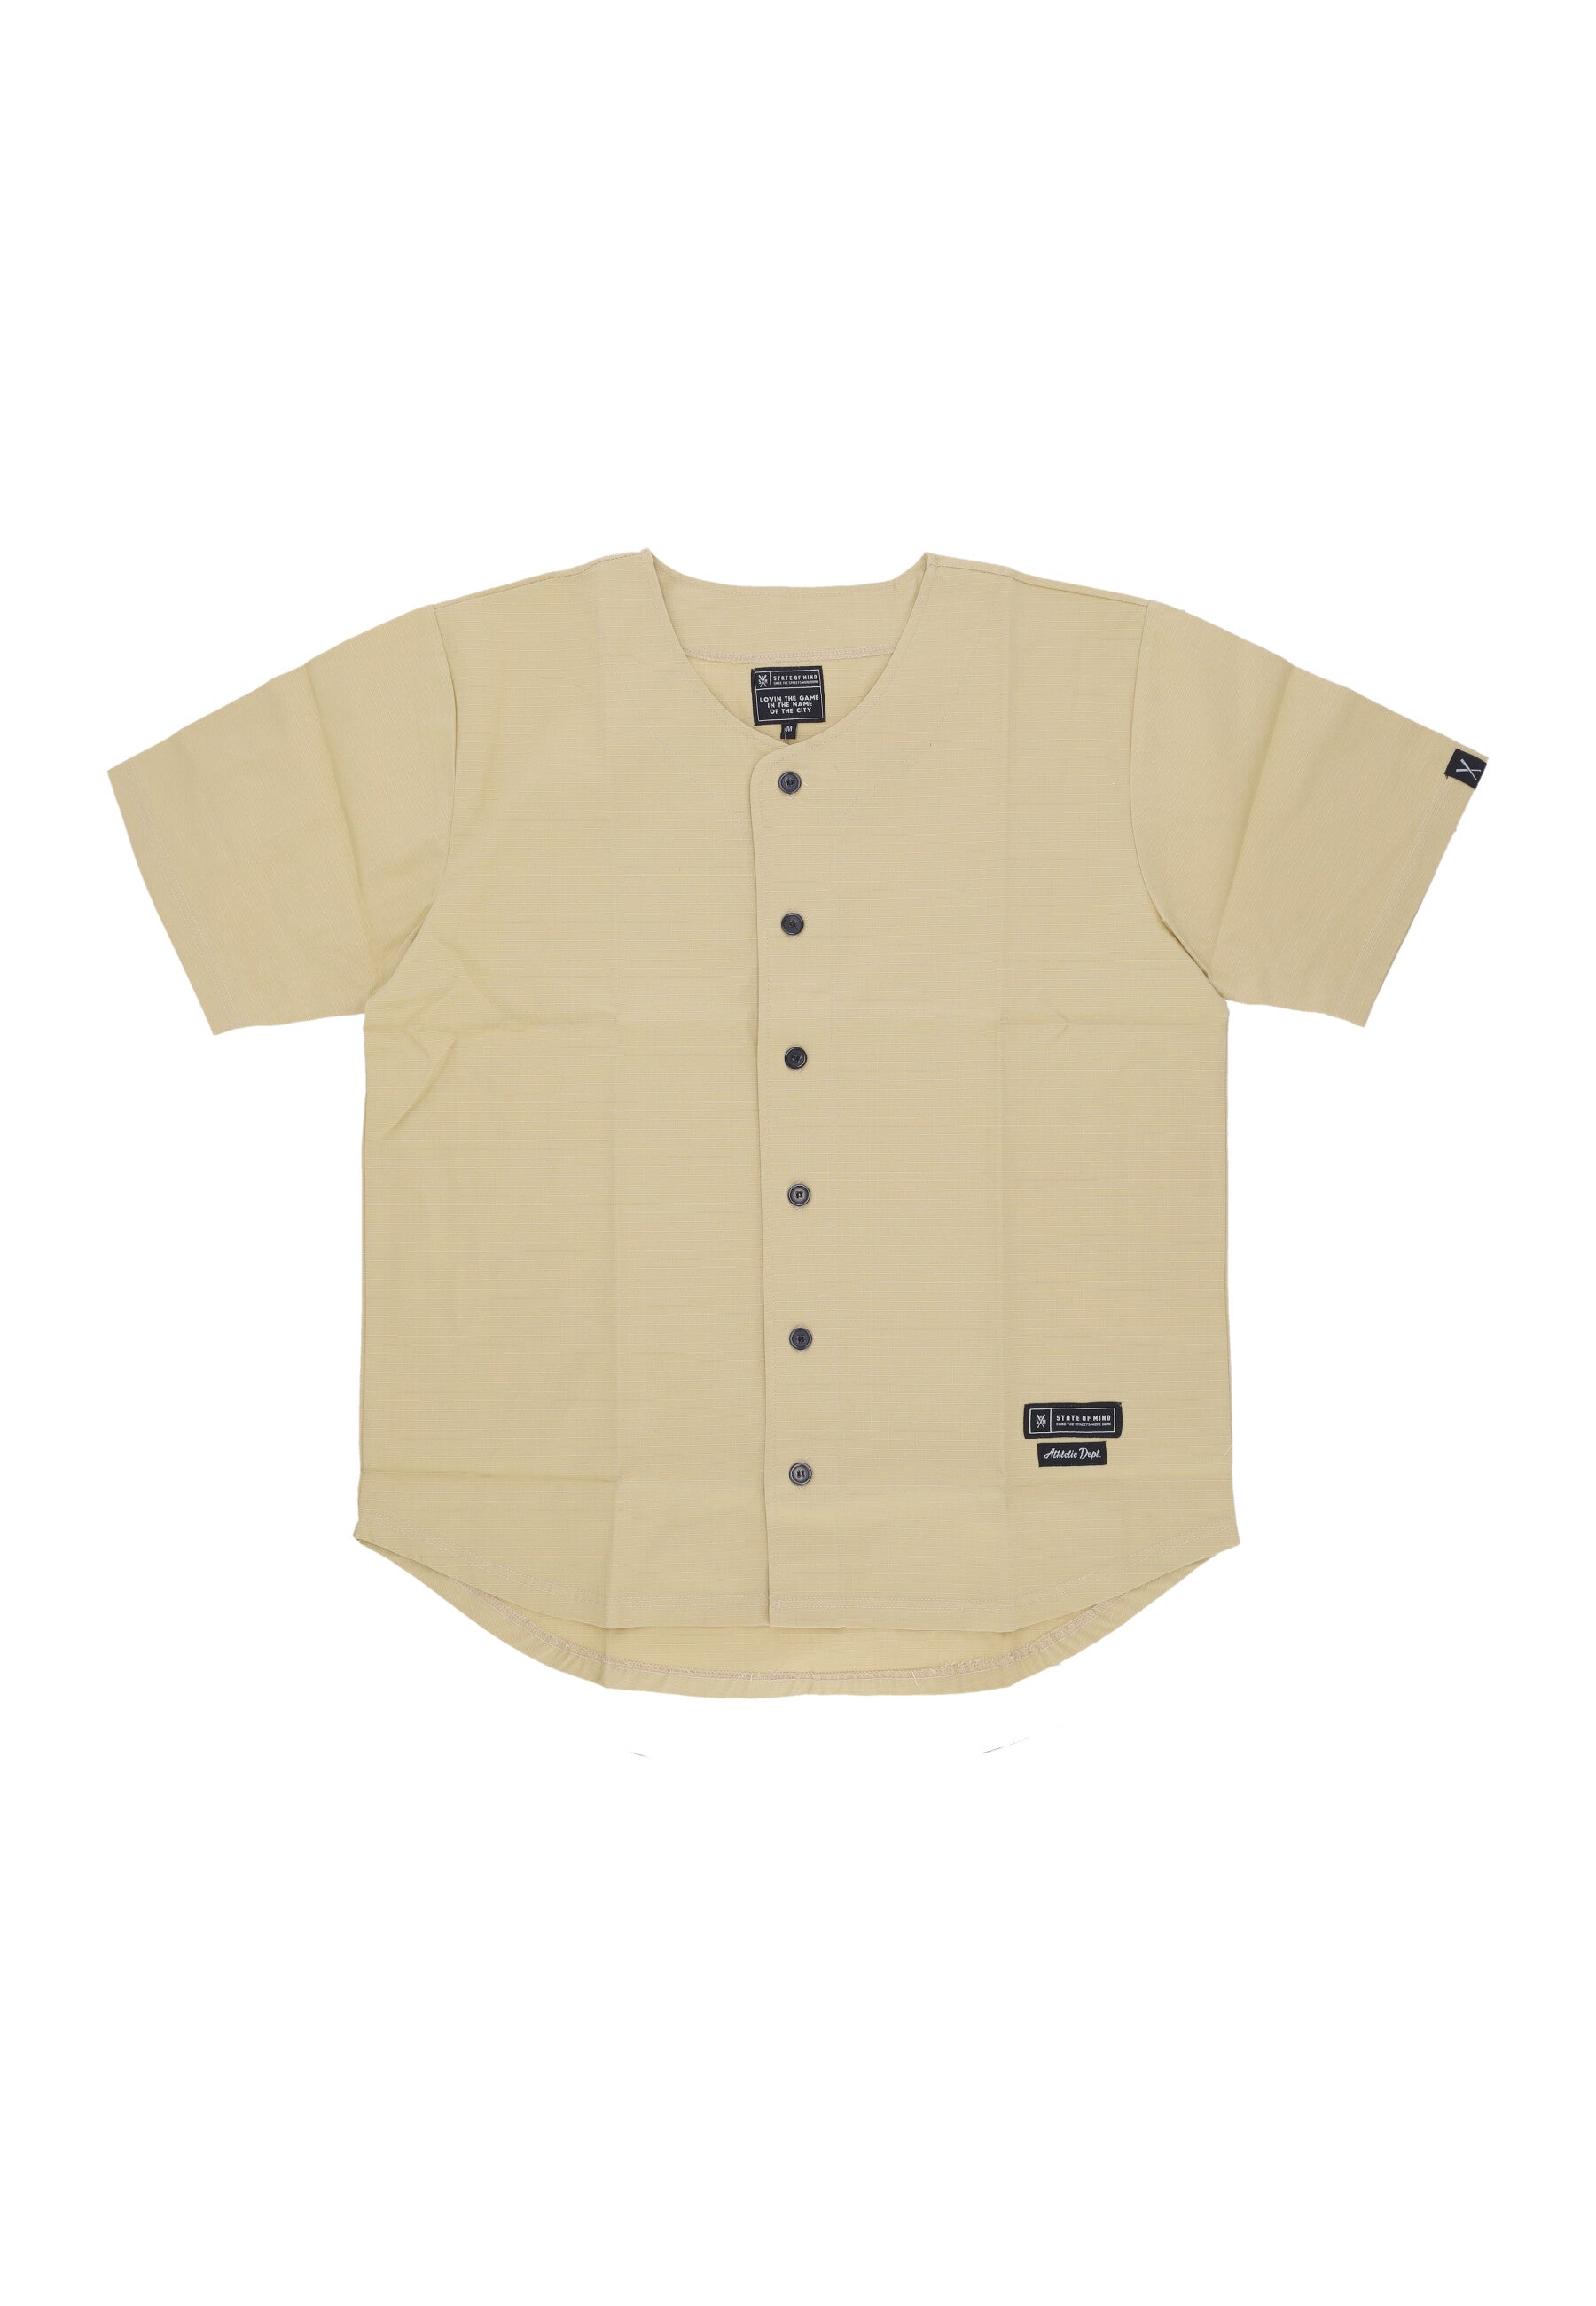 Casacca Bottoni Uomo Baseball Shirt Sand CMSOM4101